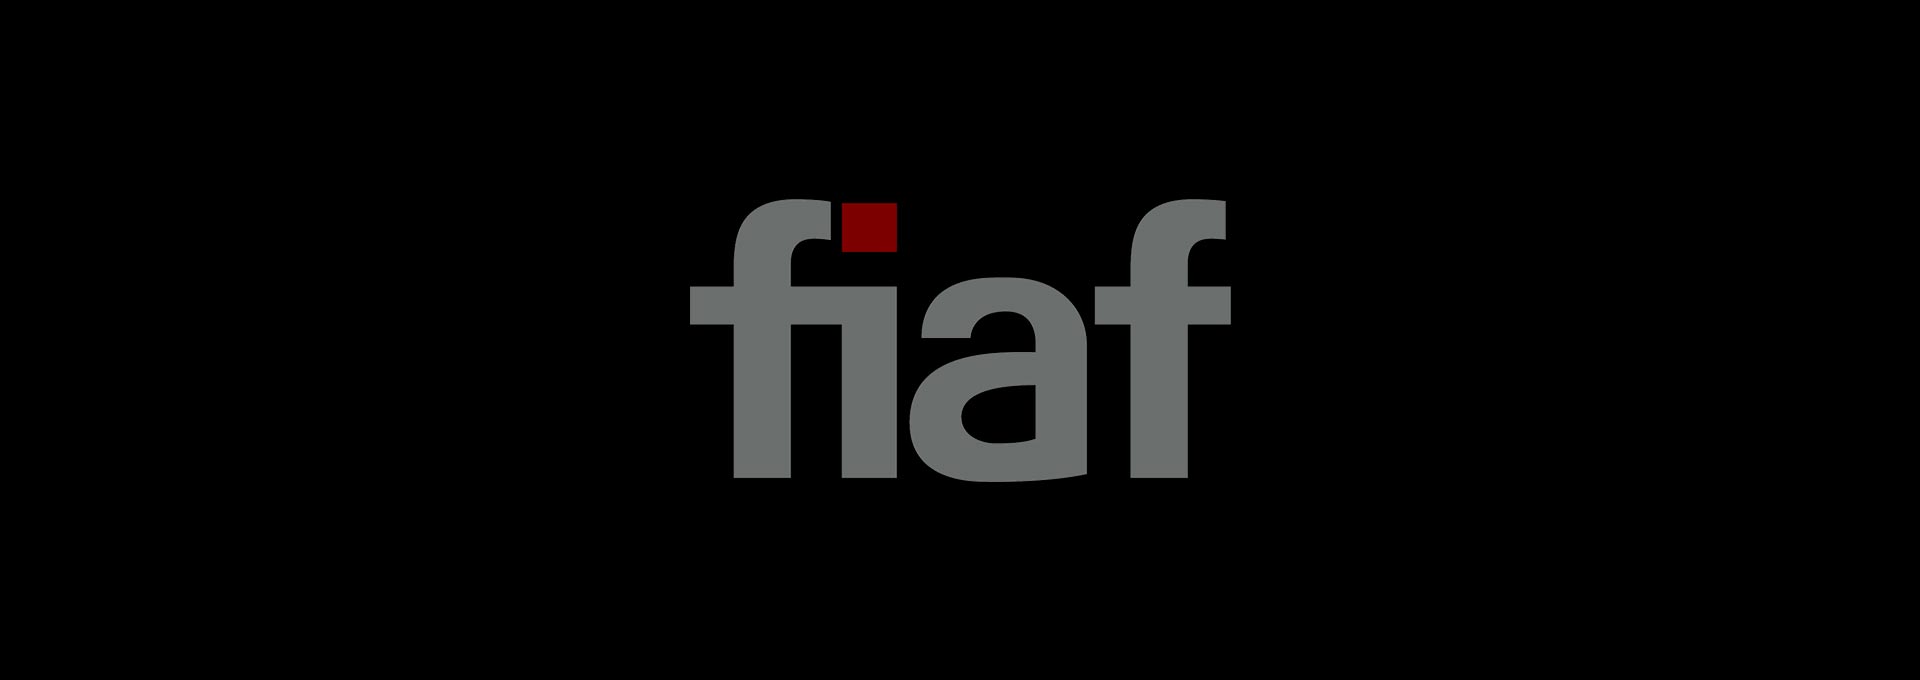 International Federation of Film Archives